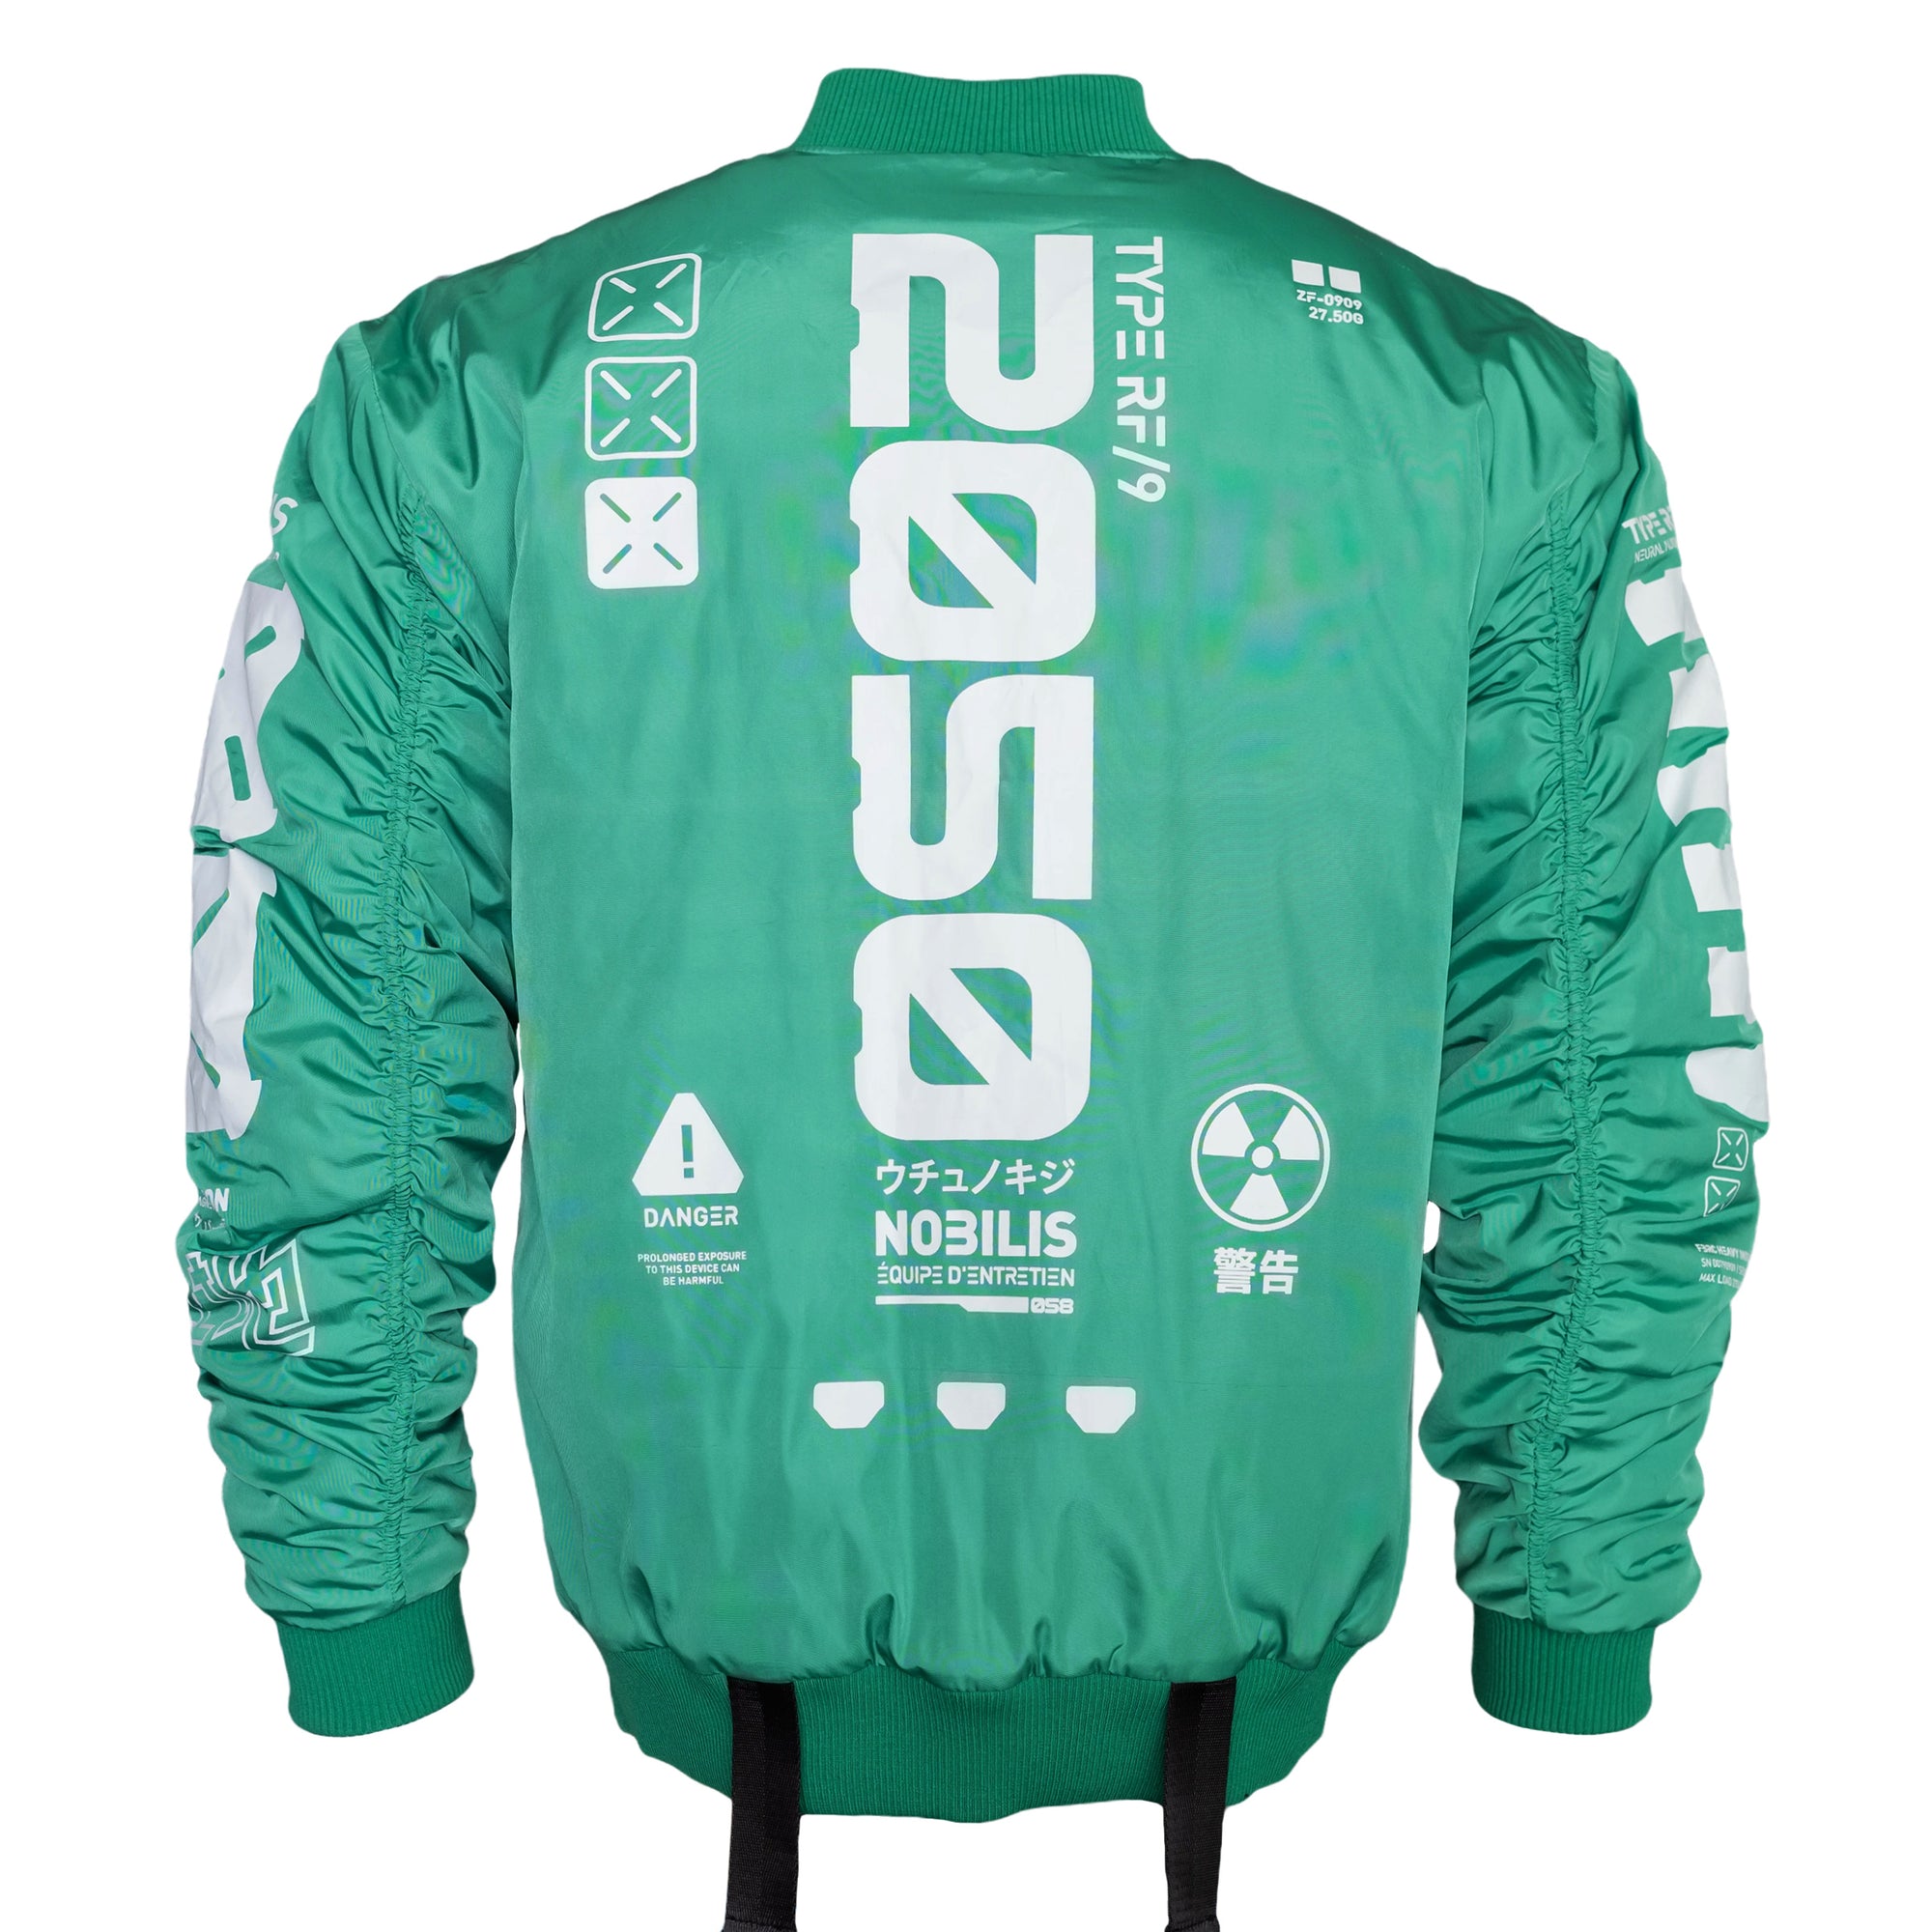 Y-2050 Green Bomber Jacket